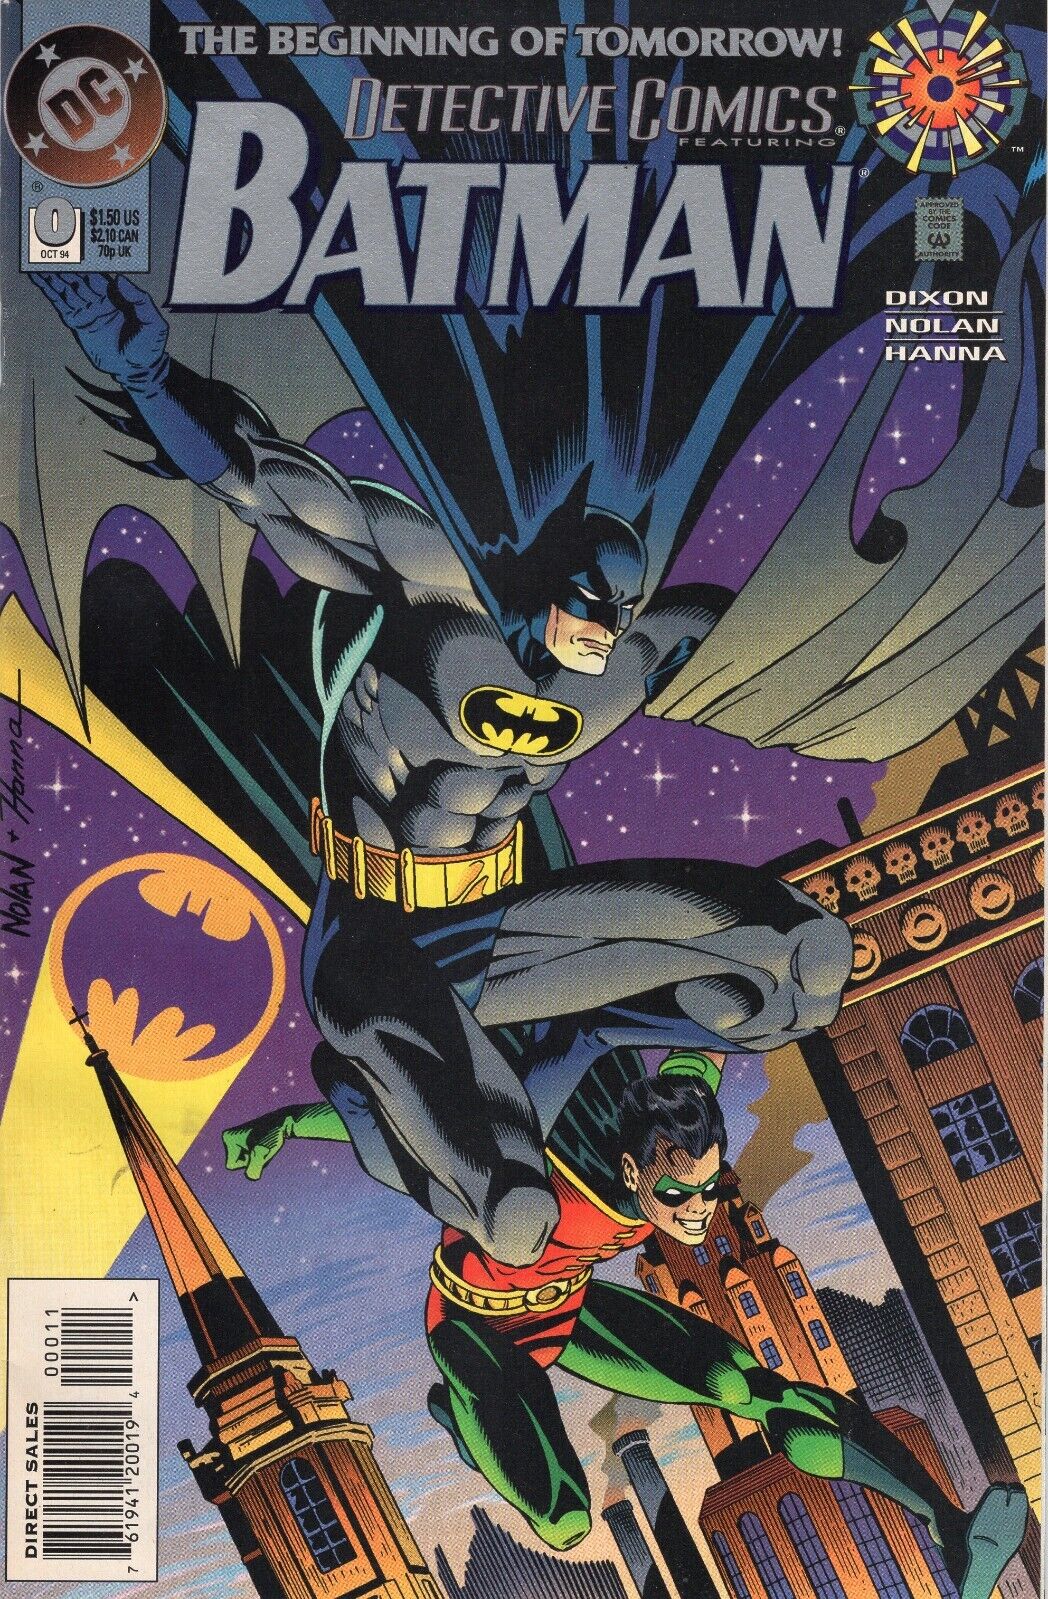 DC Comics Detective Comics Batman Single issues, You pick, Finish Your Run